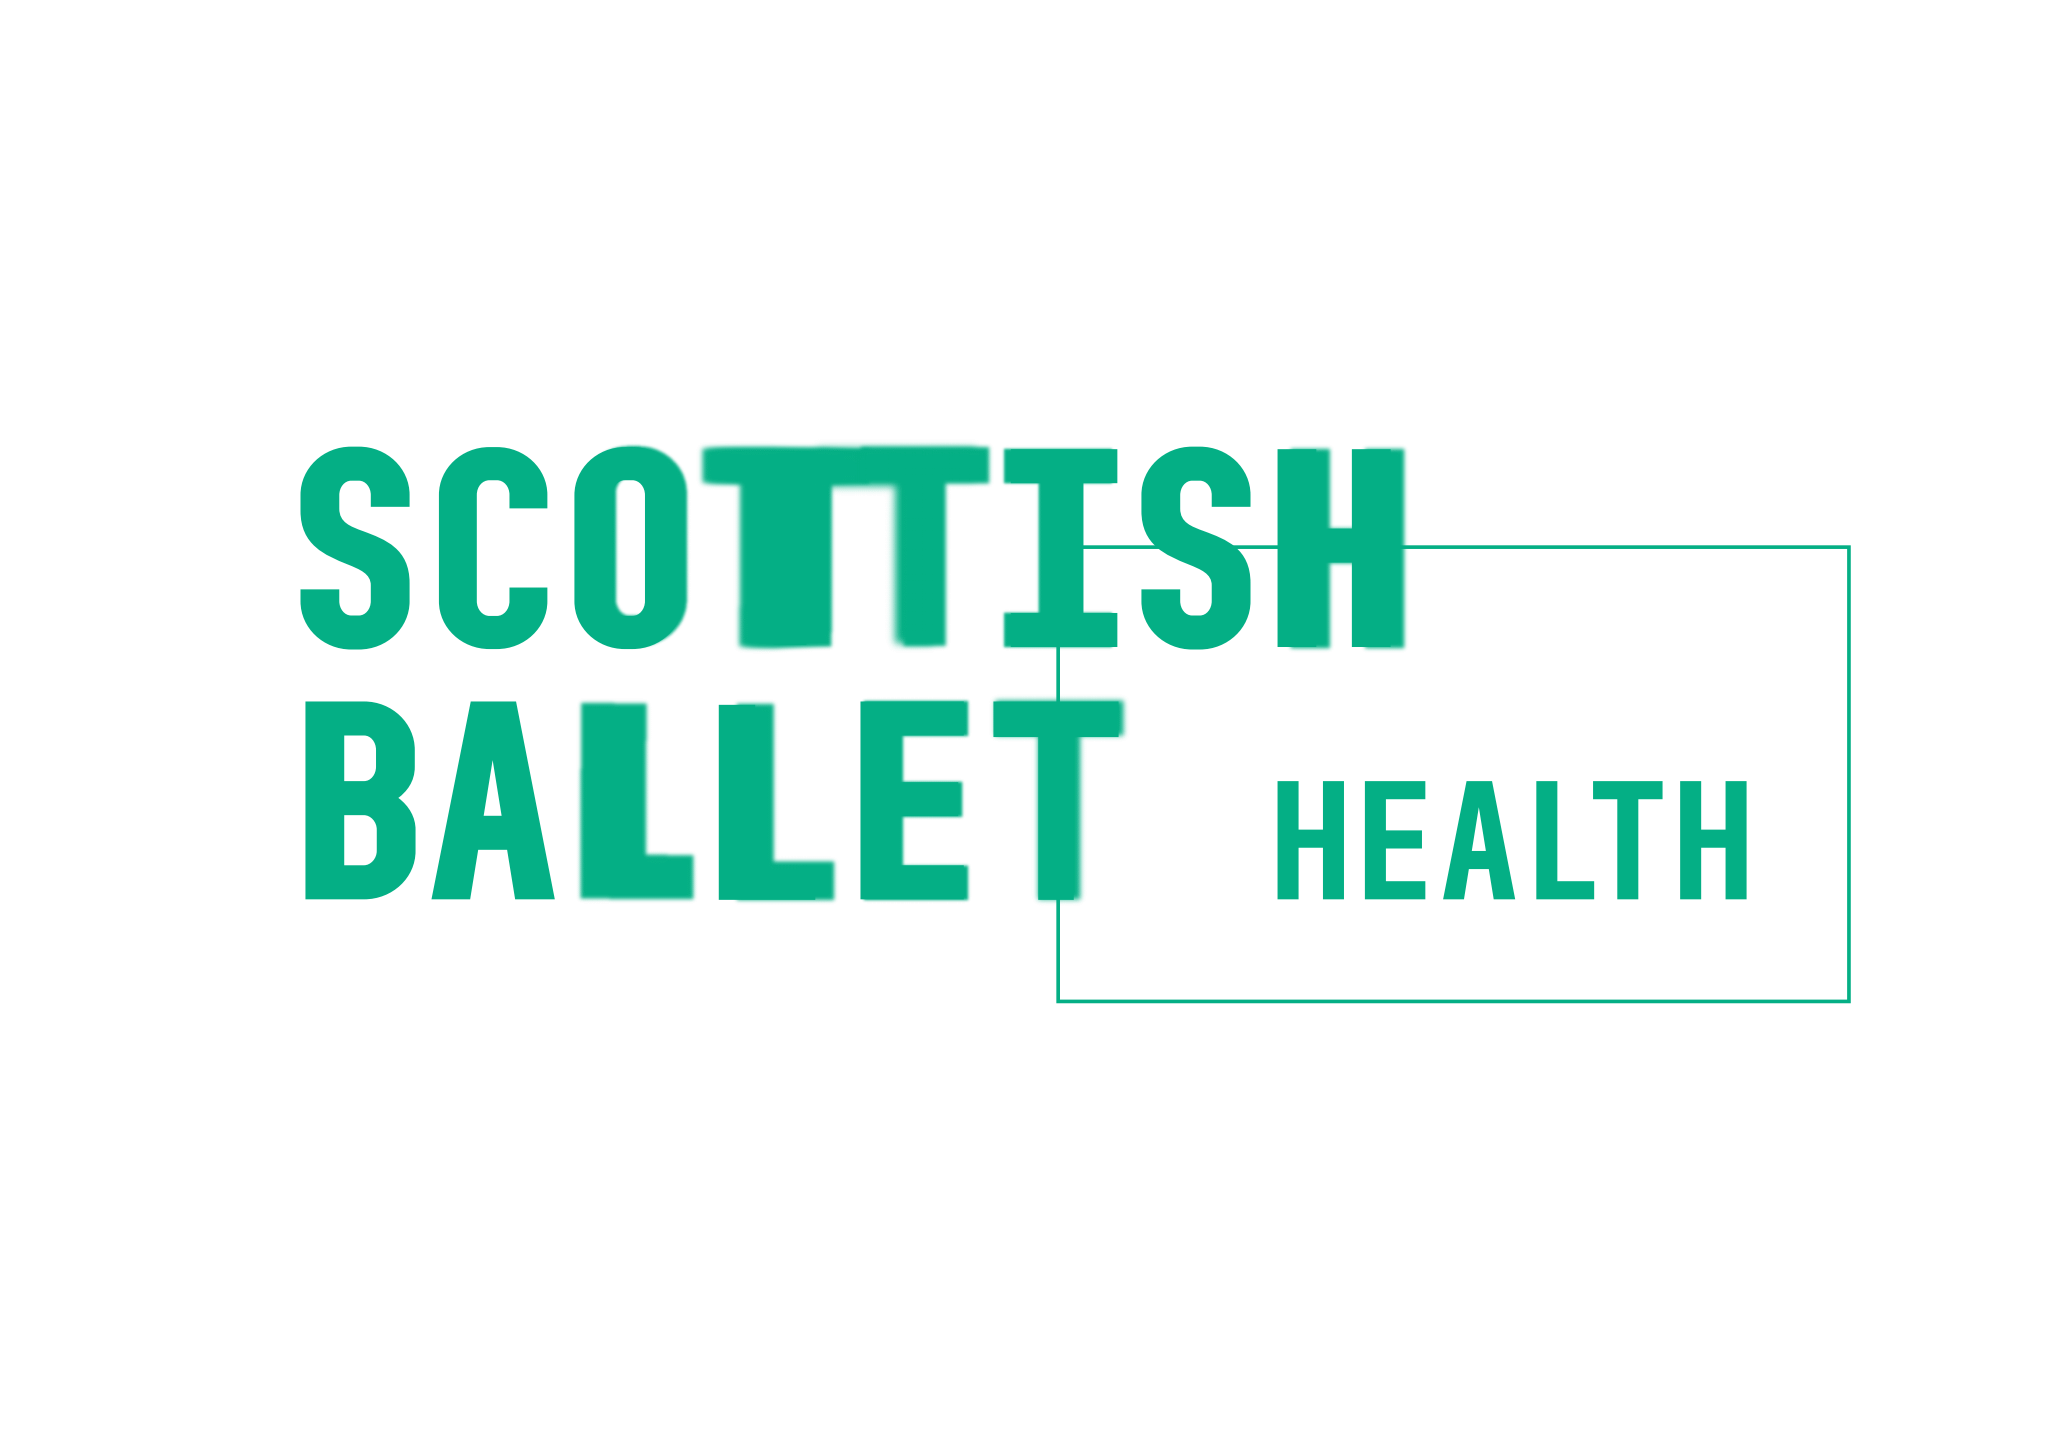 Scottish Ballet Logo